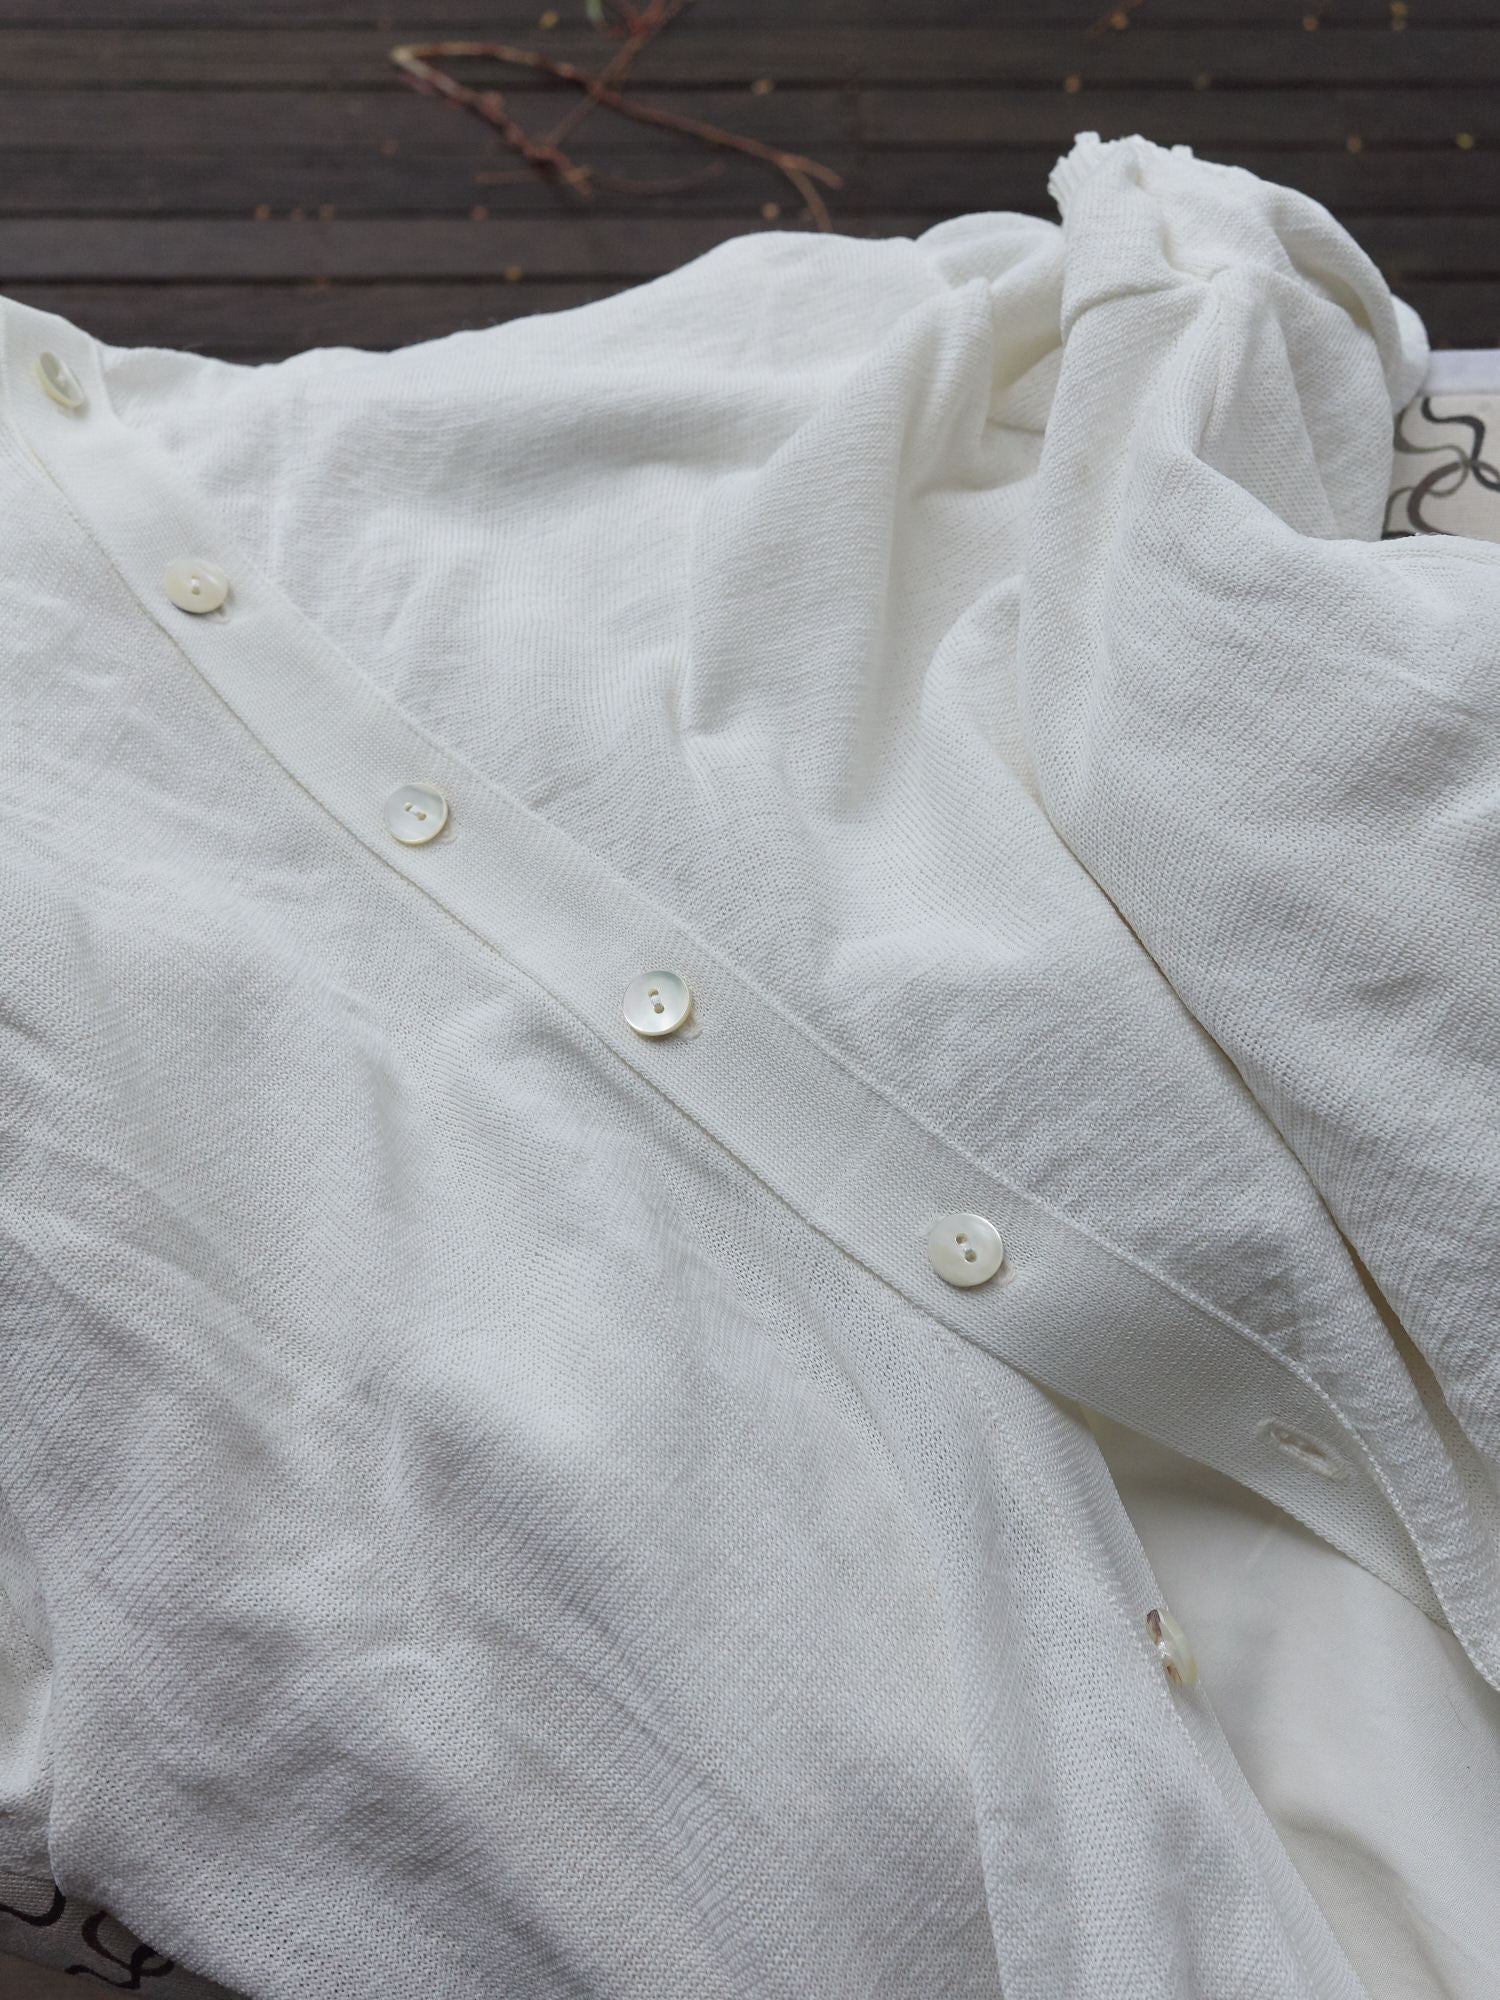 Tricot Comme des Garcons 1997 white layered short sleeve cardigan dress - sz S M